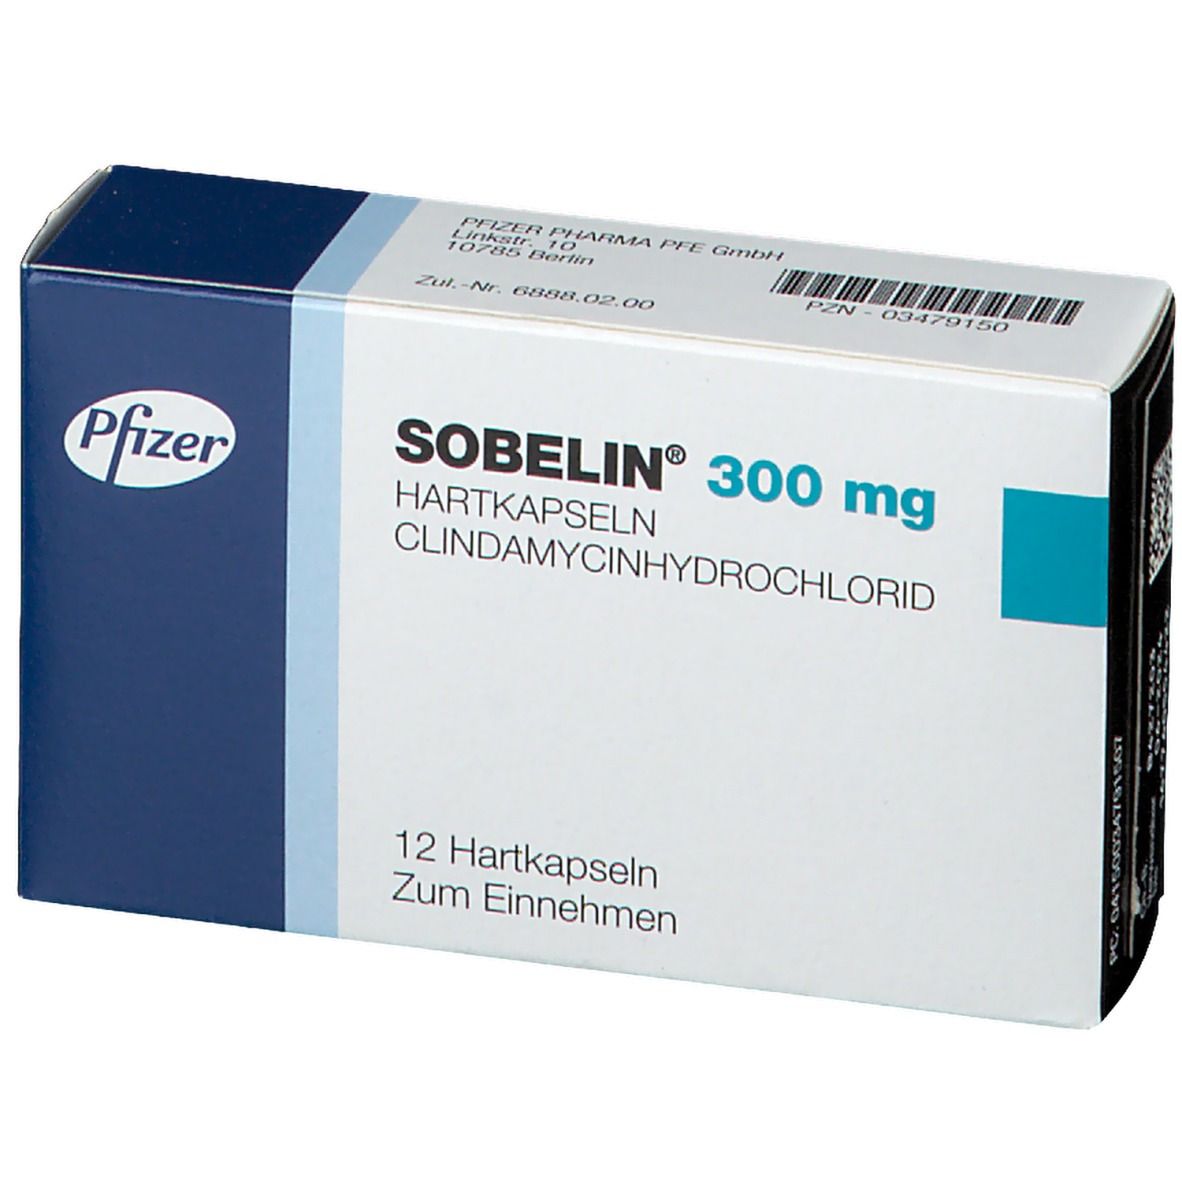 SOBELIN® 300 mg